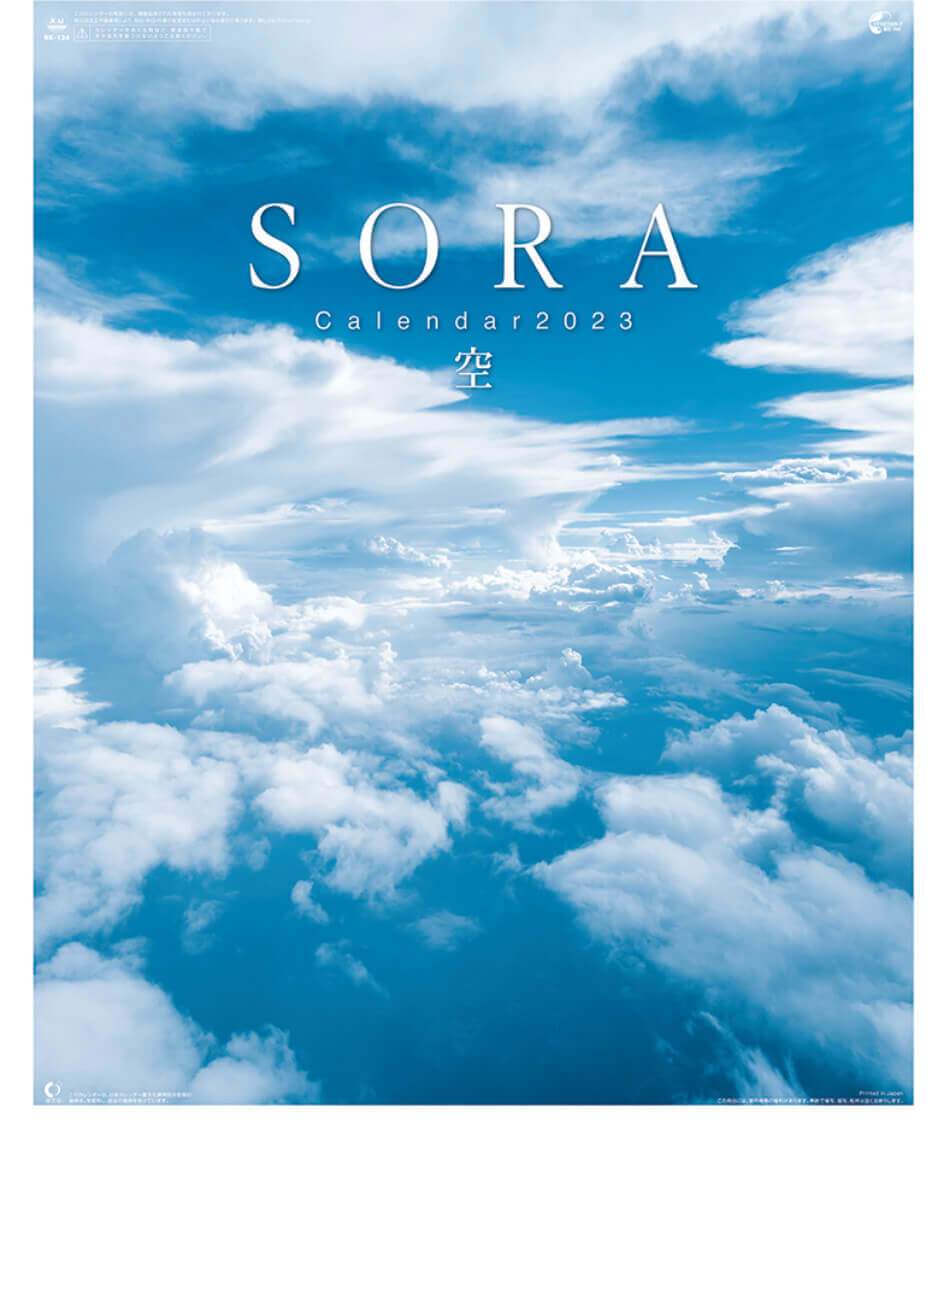  SORA -空- 2023年カレンダーの画像